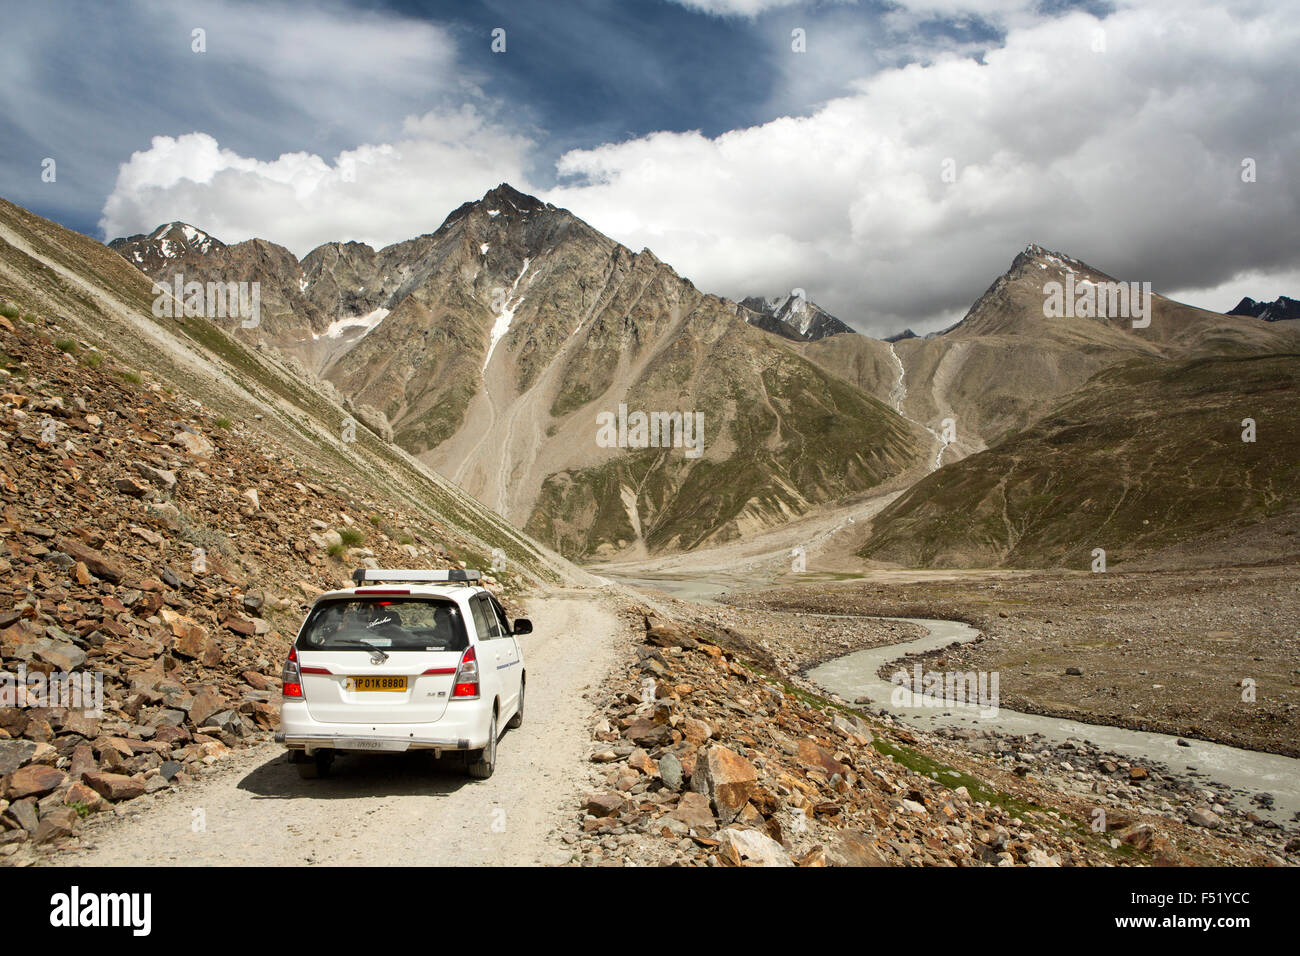 India, Himachal Pradesh, Lahaul Valley, Chhota Dara, Toyota Avensis, car on rocky road through Chandra River valley Stock Photo